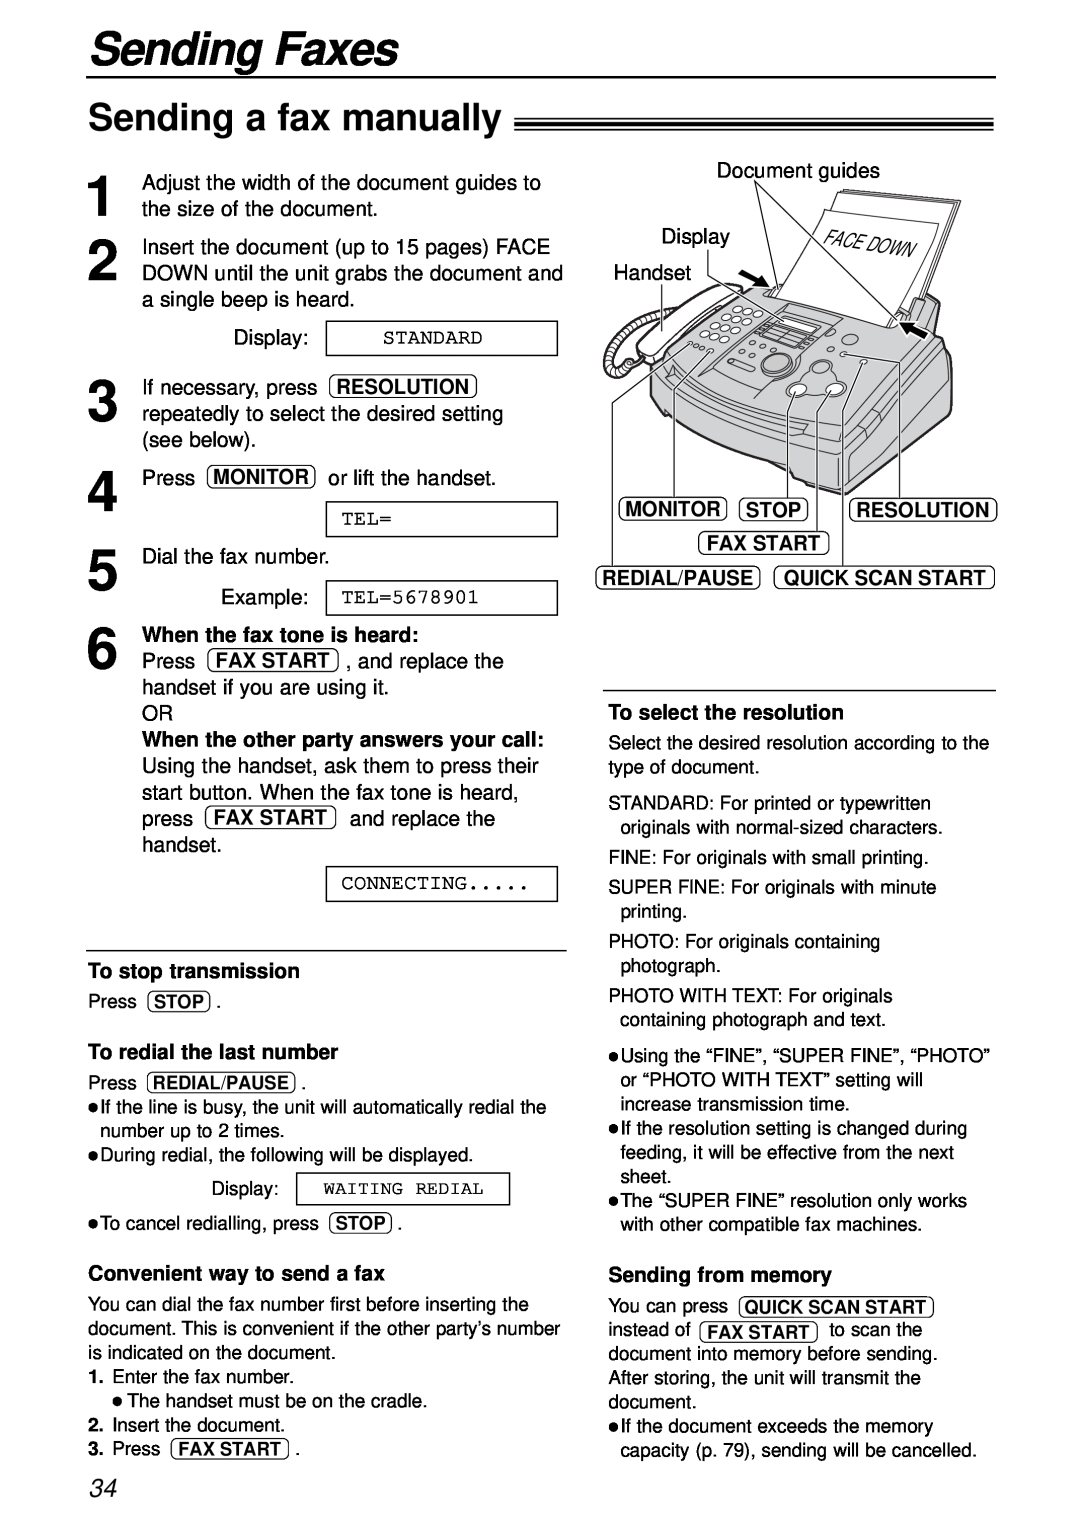 Panasonic KX-FL501AL, KX-FL501NZ Sending Faxes, Sending a fax manually, Resolution, When the fax tone is heard, Fax Start 